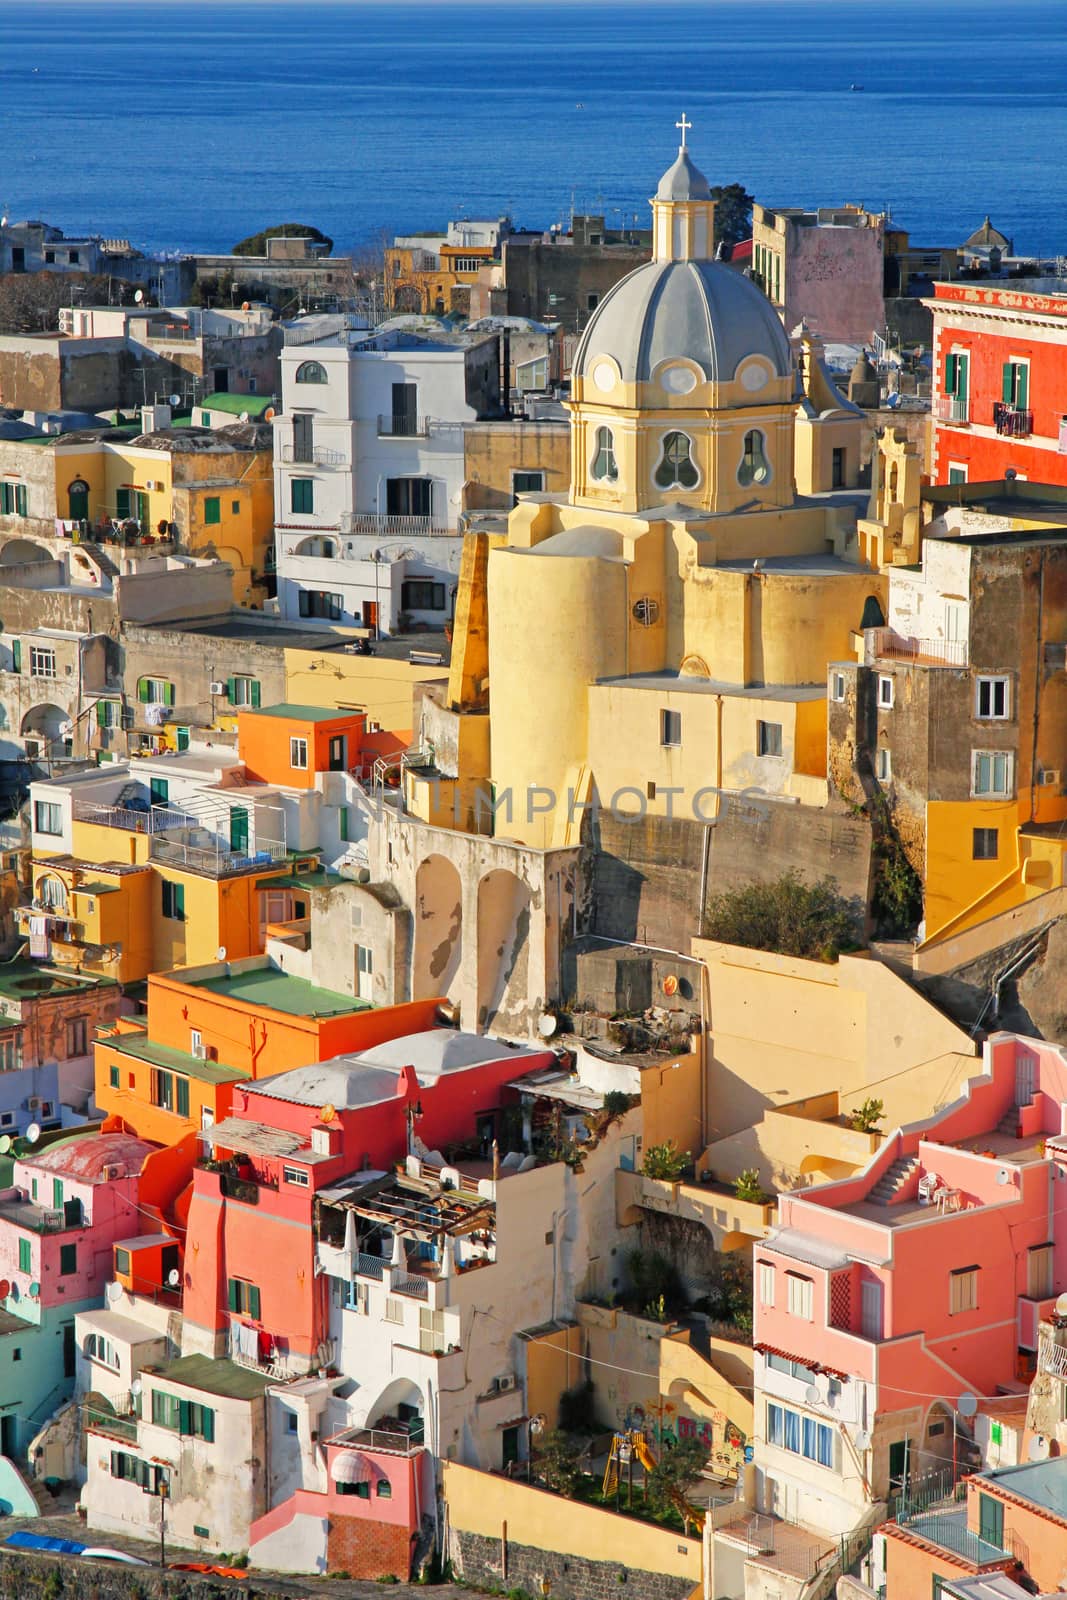 Italy. Campania region. Gulf of Naples. Procida island. Colorful houses of Corricella